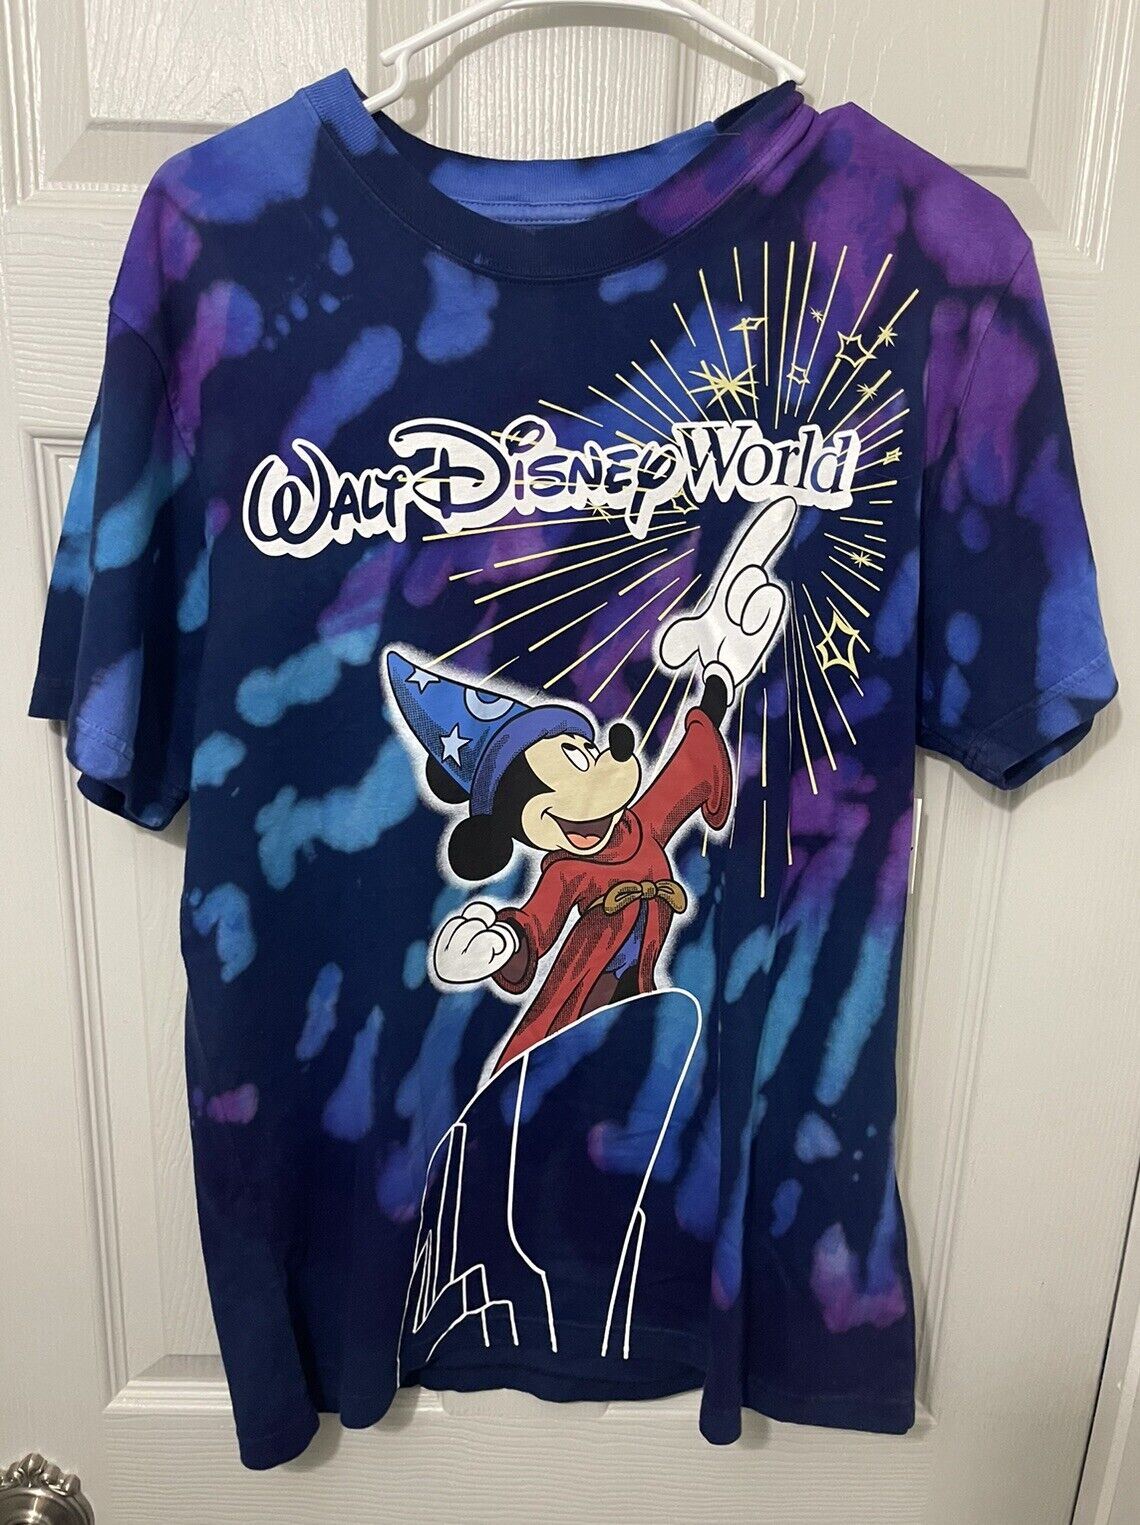 Disney Walt Disney World Sorcerer Mickey Tie Dye Shirt Adult Medium M MD New